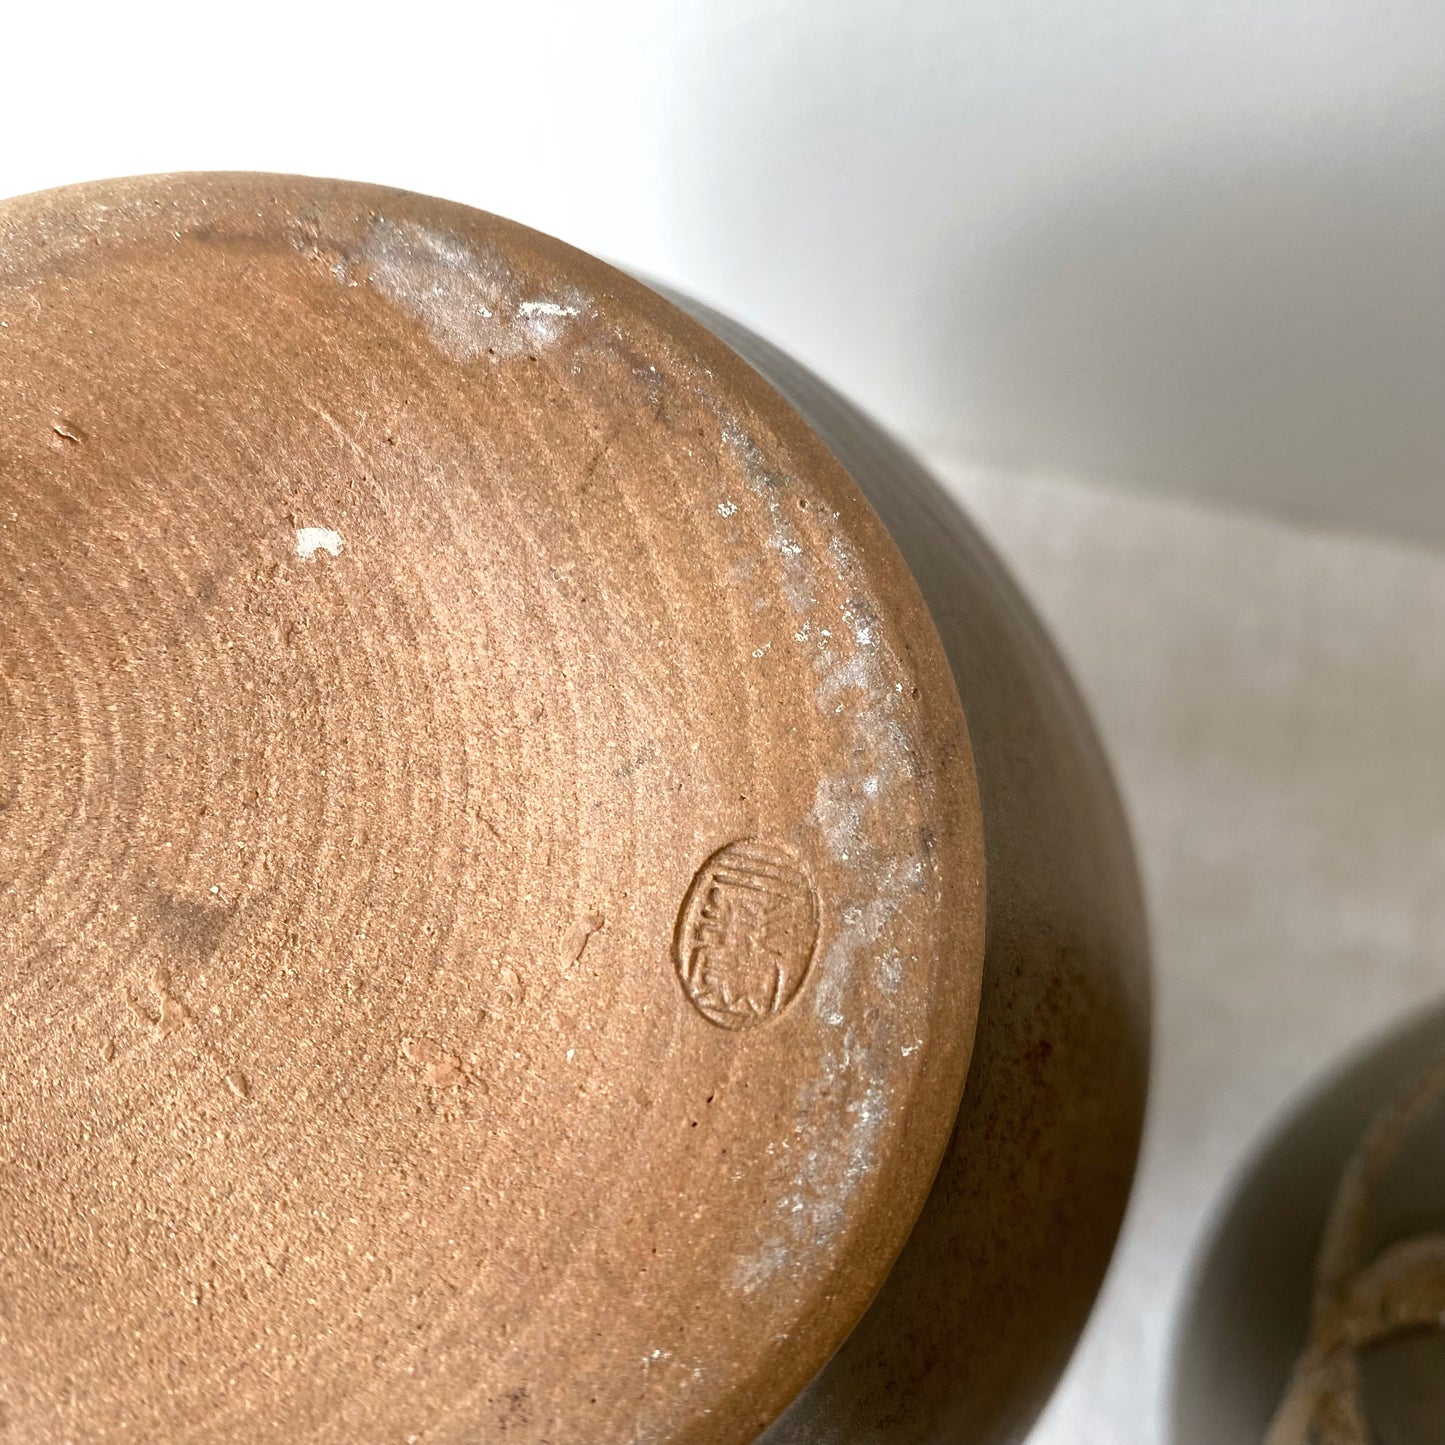 Vintage “Loopy” Studio Pottery Vessel Vase, Choose